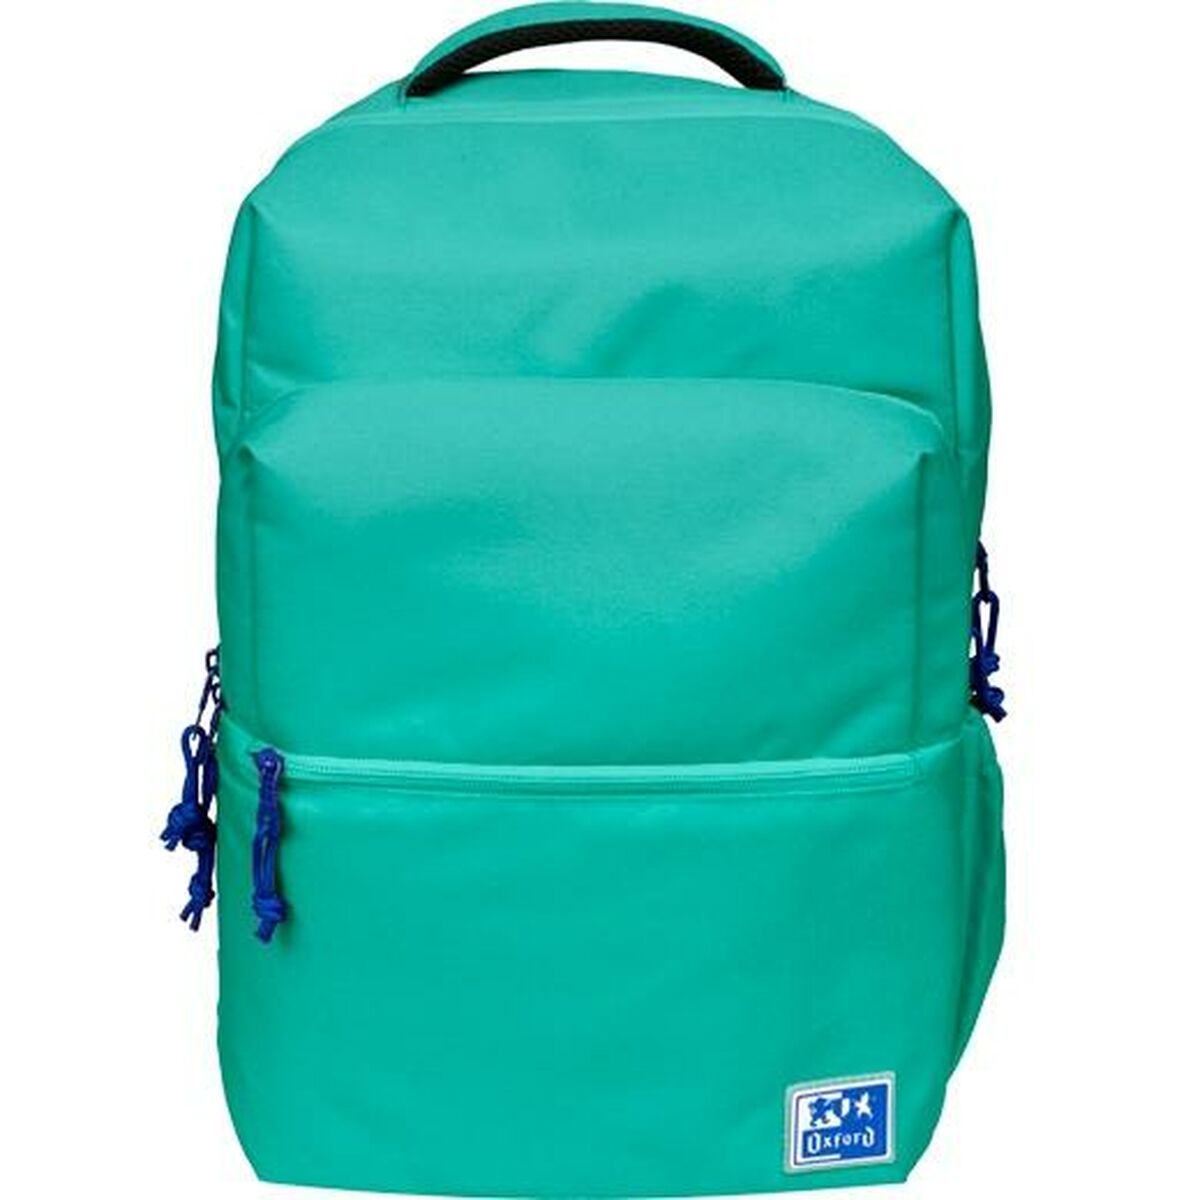 School Bag Oxford B-Ready Mint